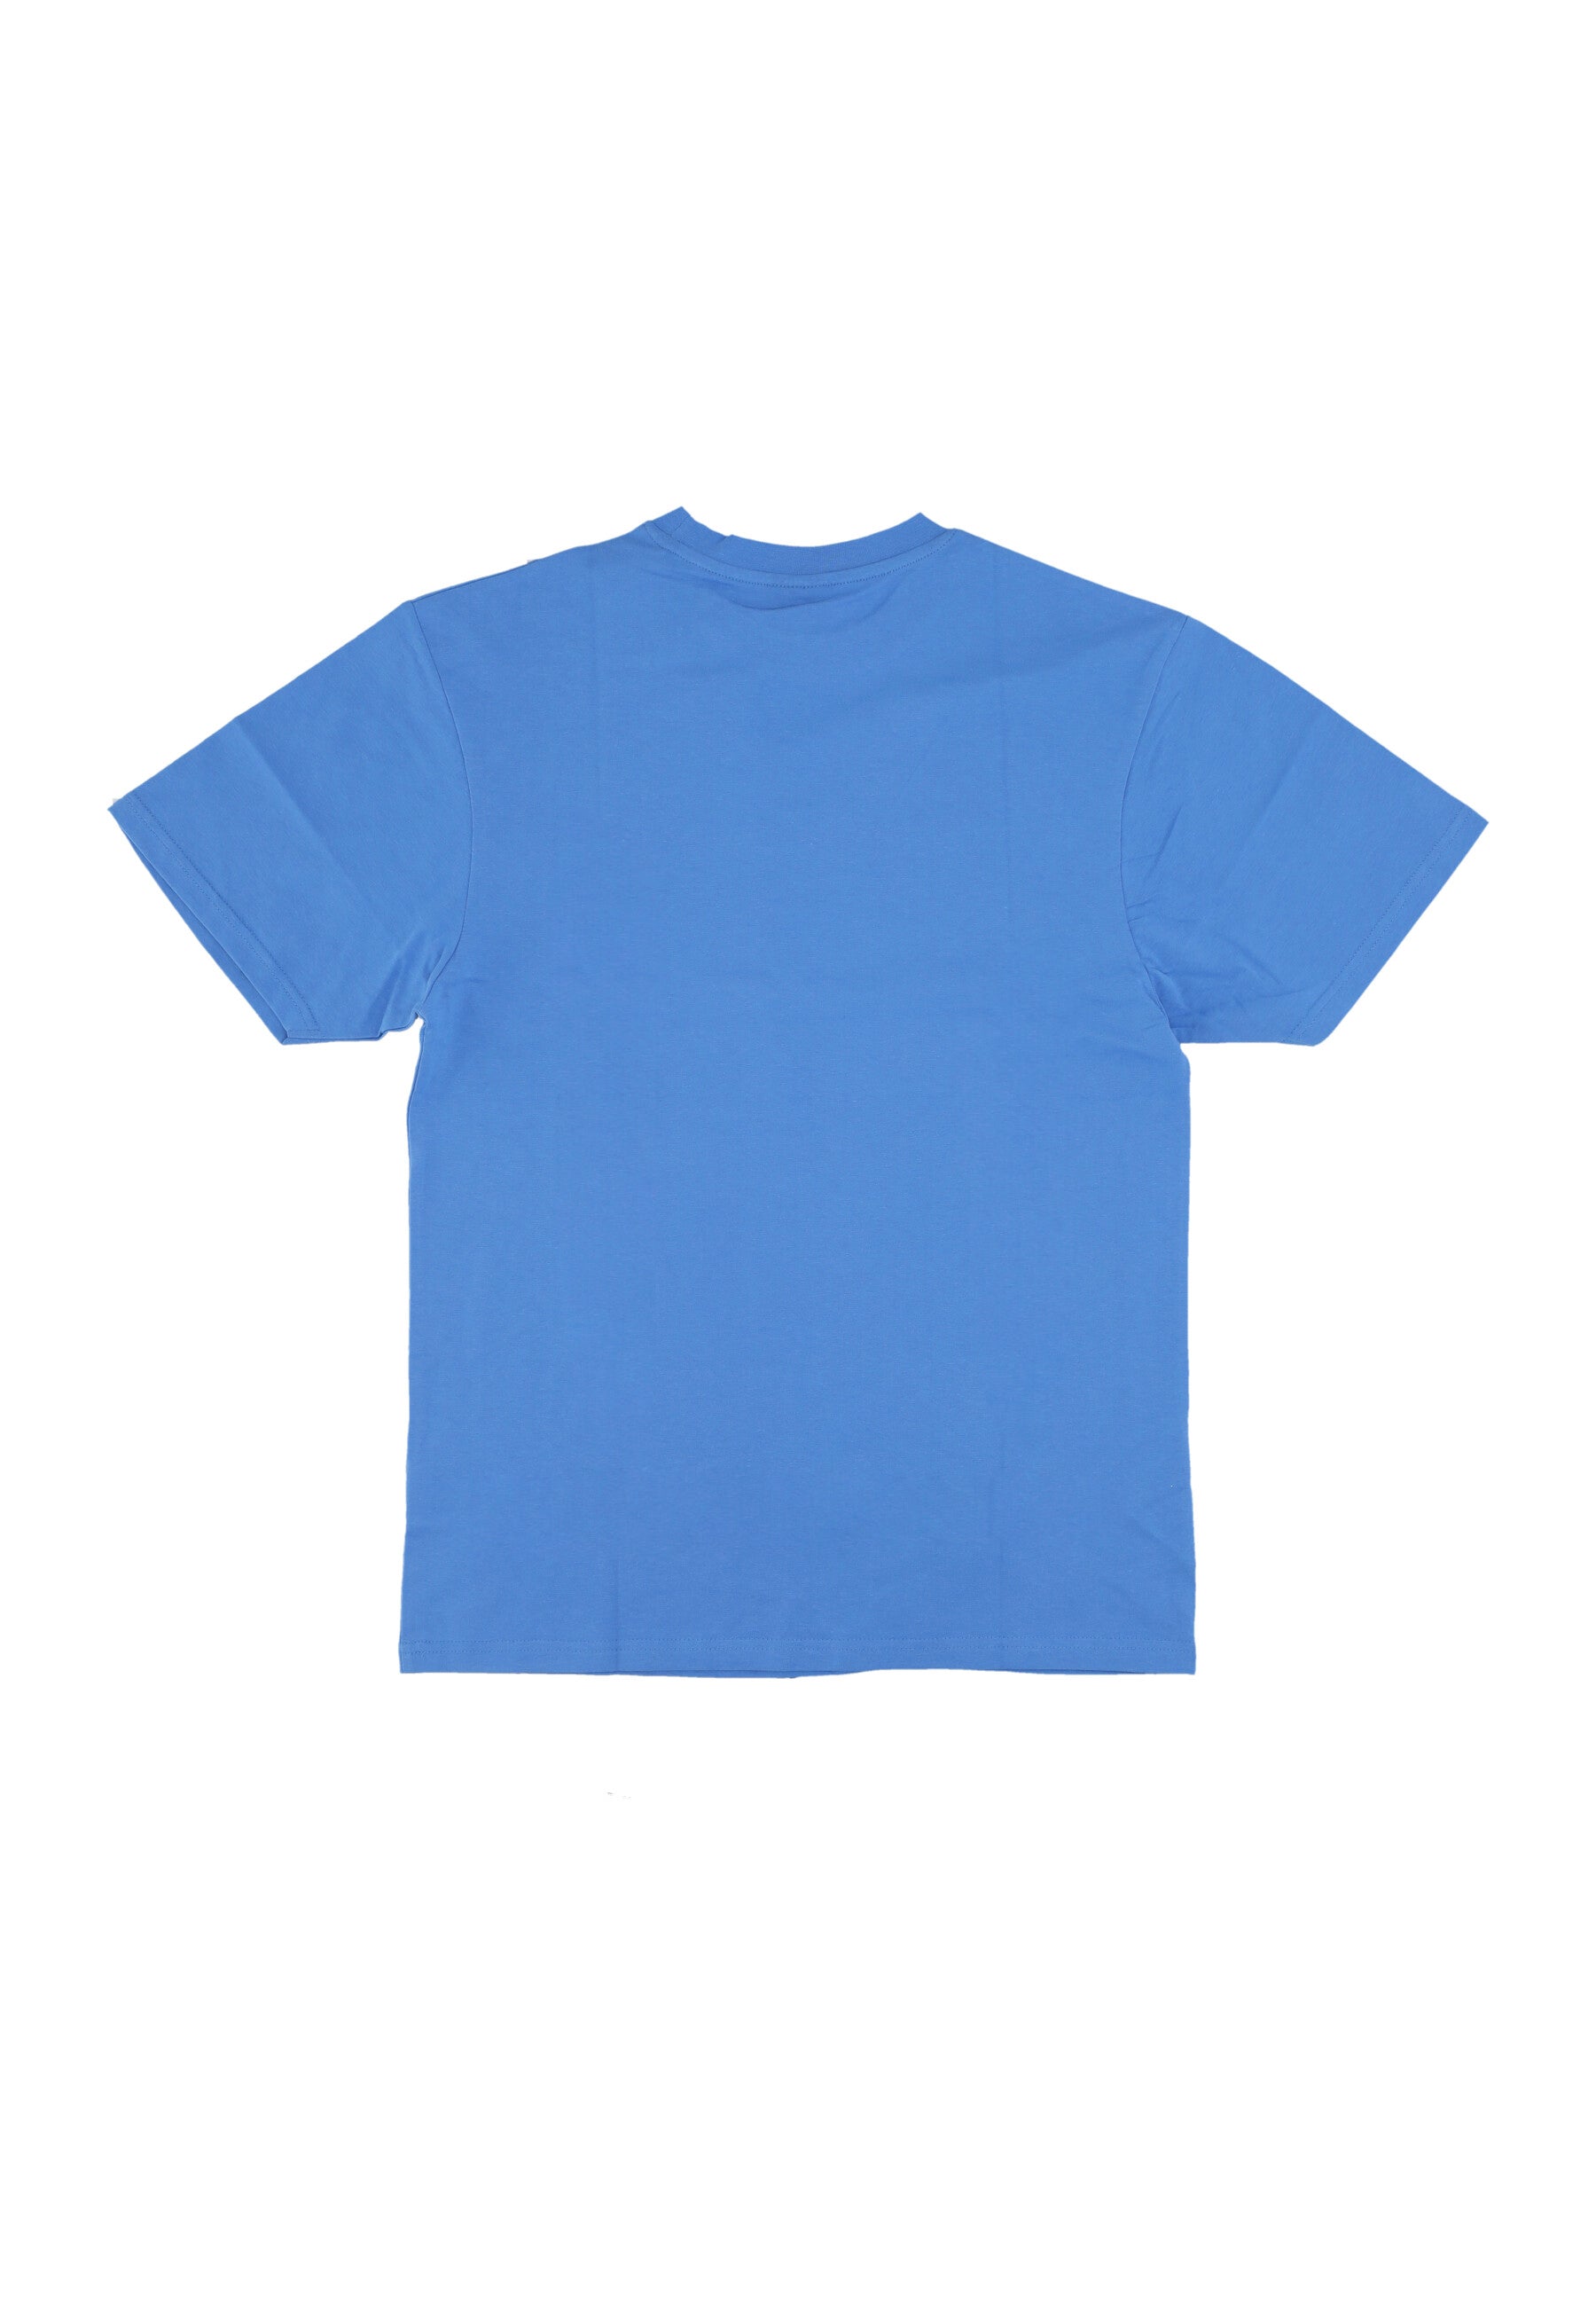 Maglietta Uomo Btg Curb Front Tee Mineral Blue INA-TEE-9950